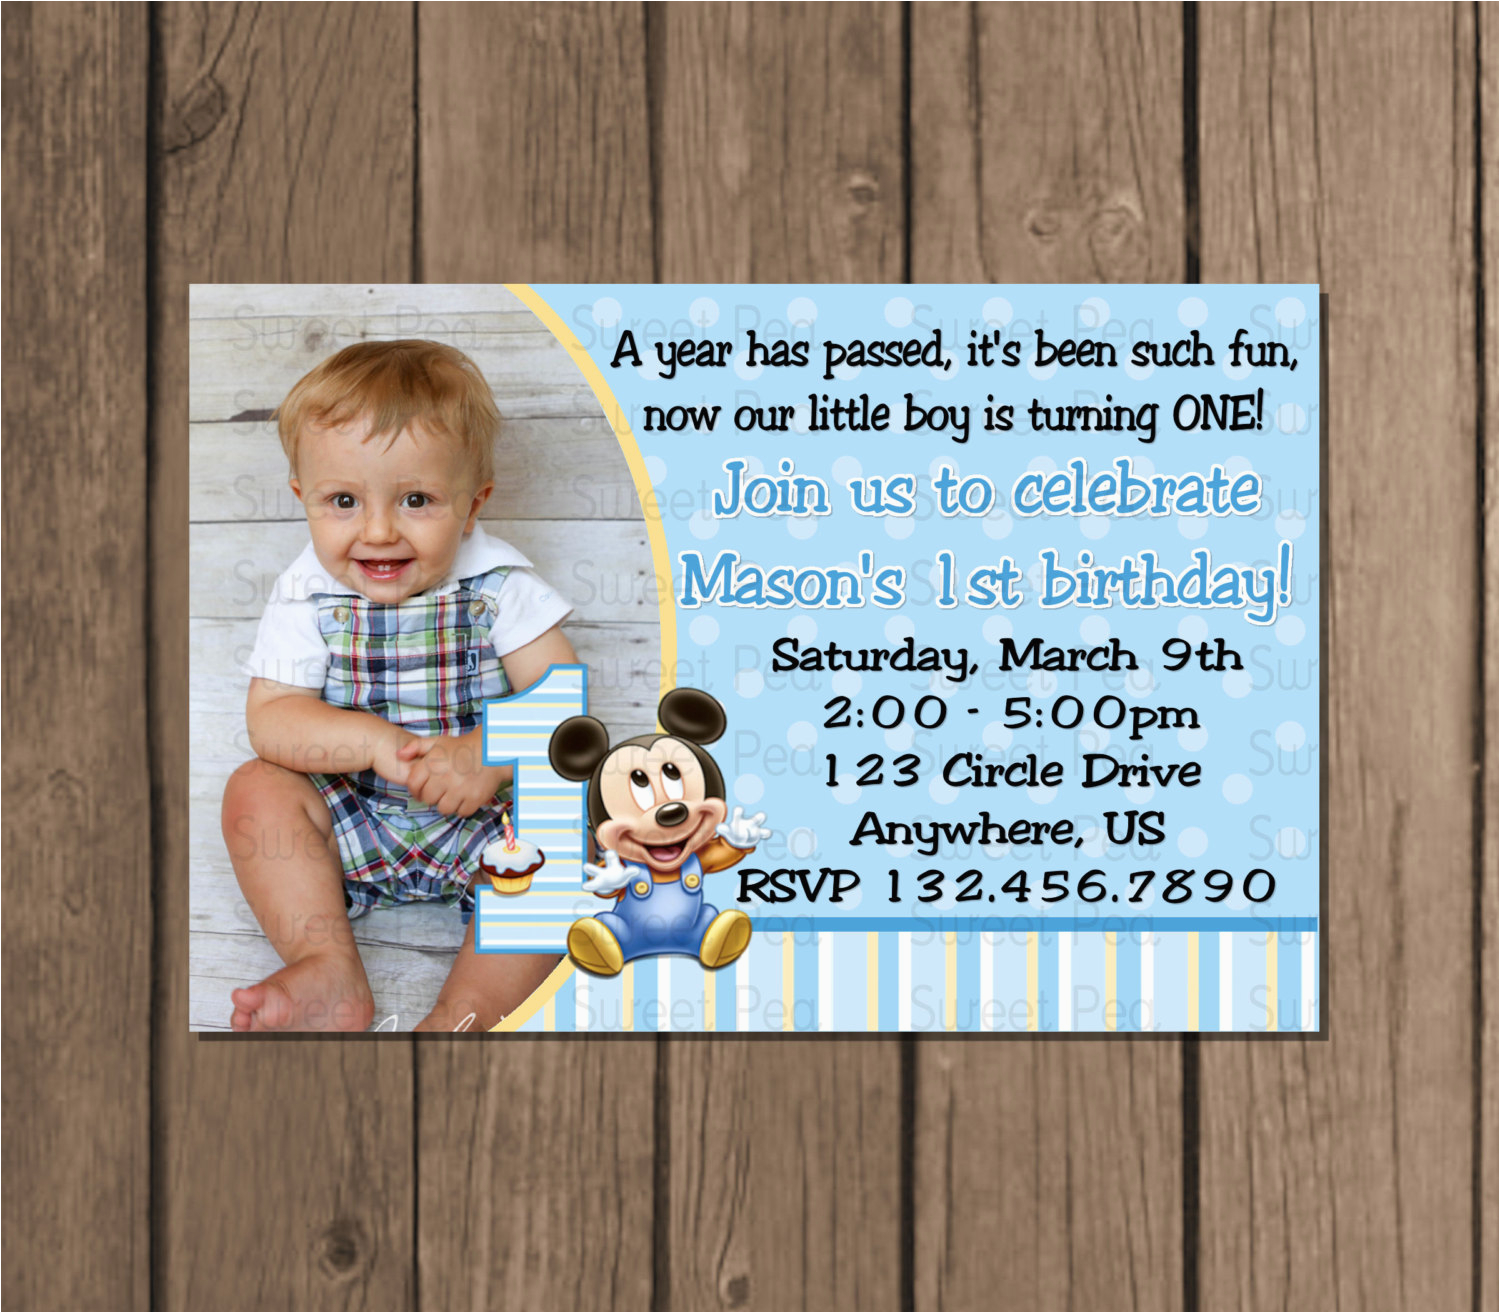 1st birthday invitation message for baby boy in marathi